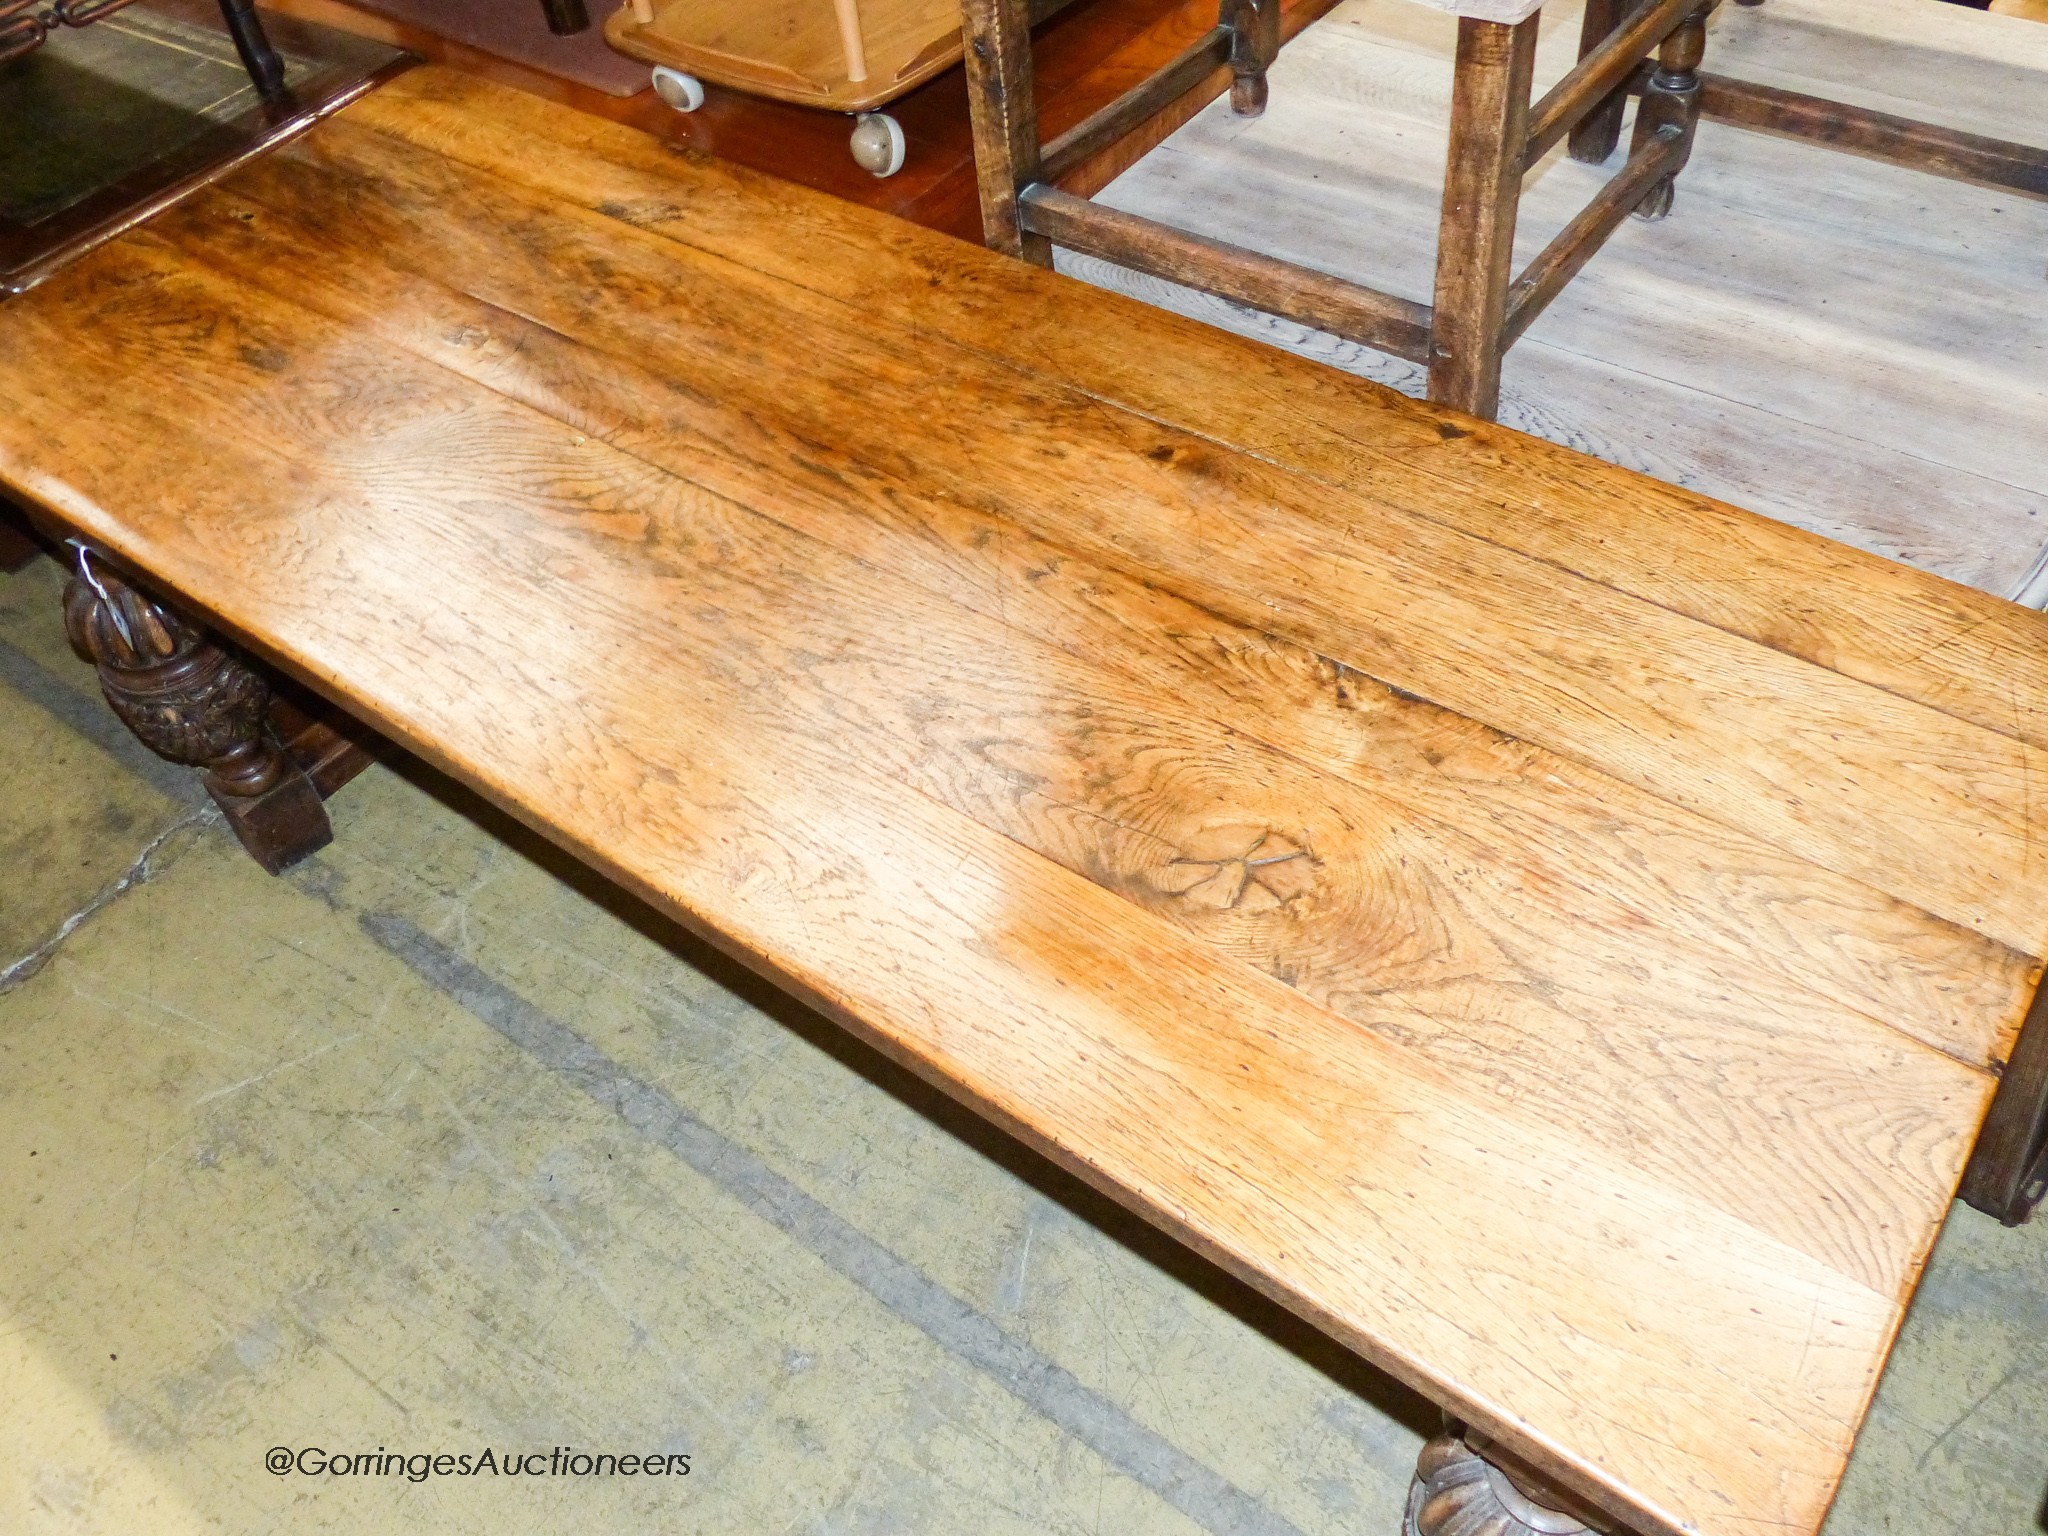 An Elizabethan style rectangular oak refectory dining table, width 198cm, depth 77cm, height 78cm